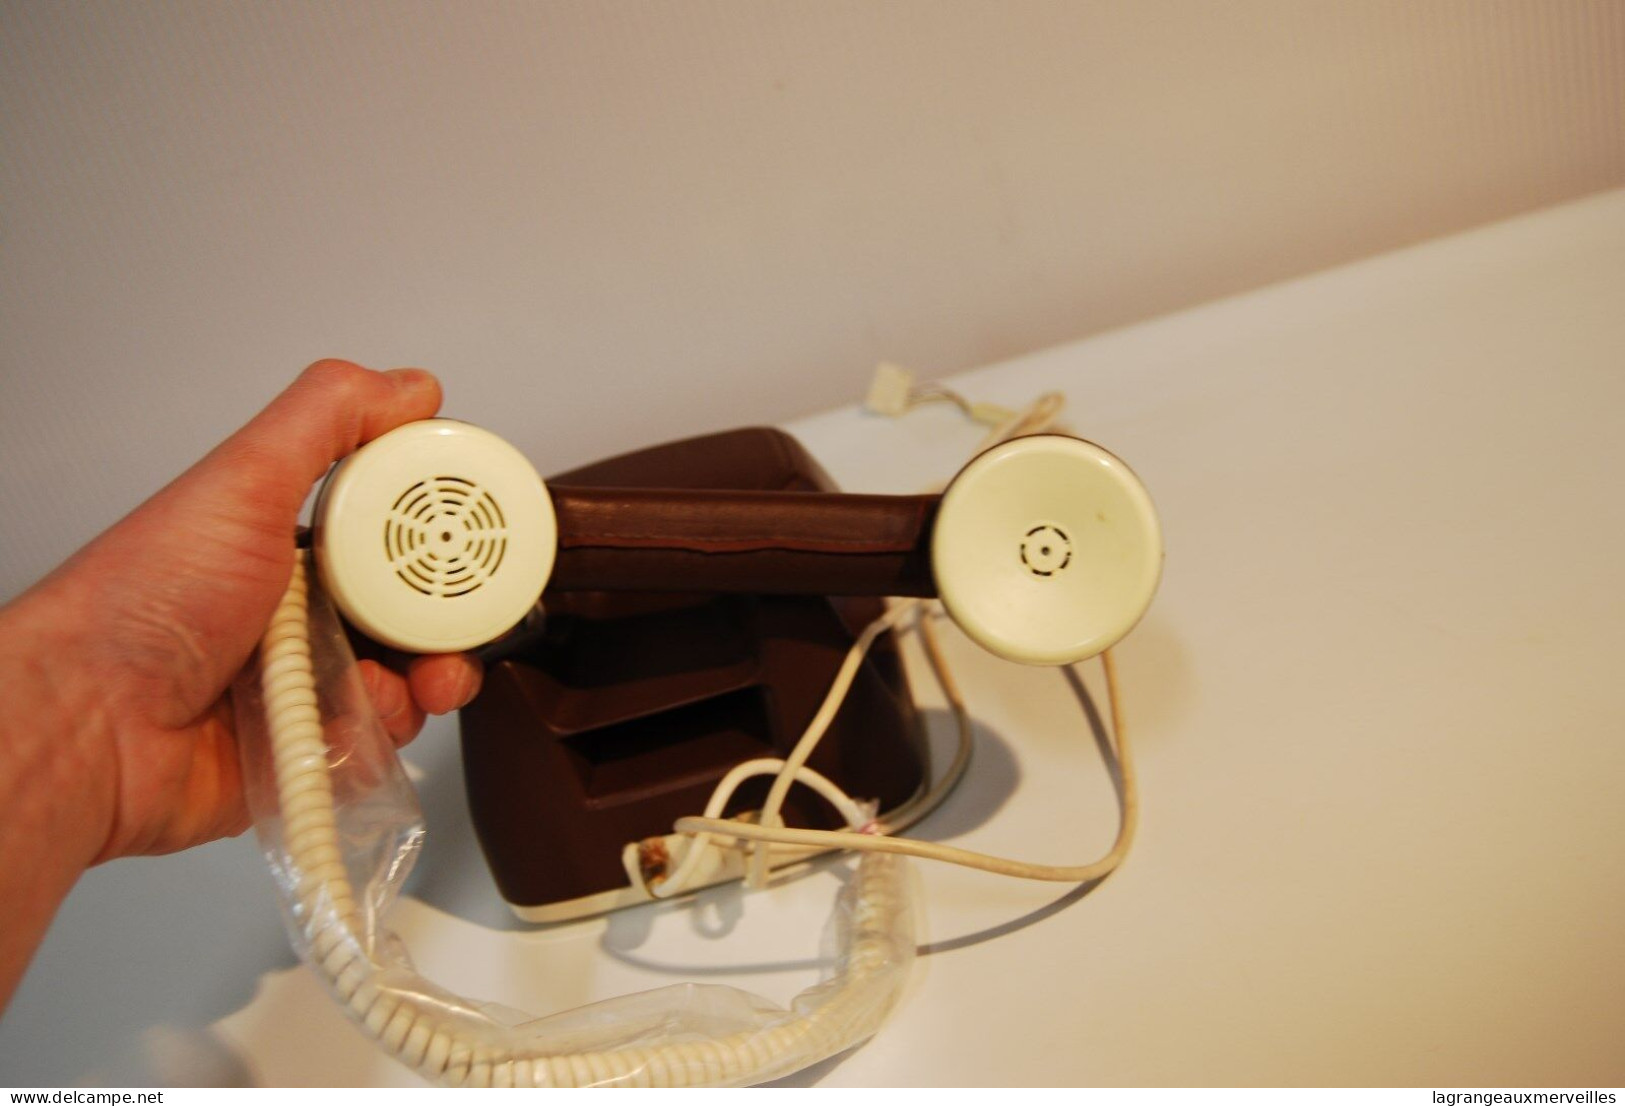 C132 Vintage Retro Phone en bakelite noire